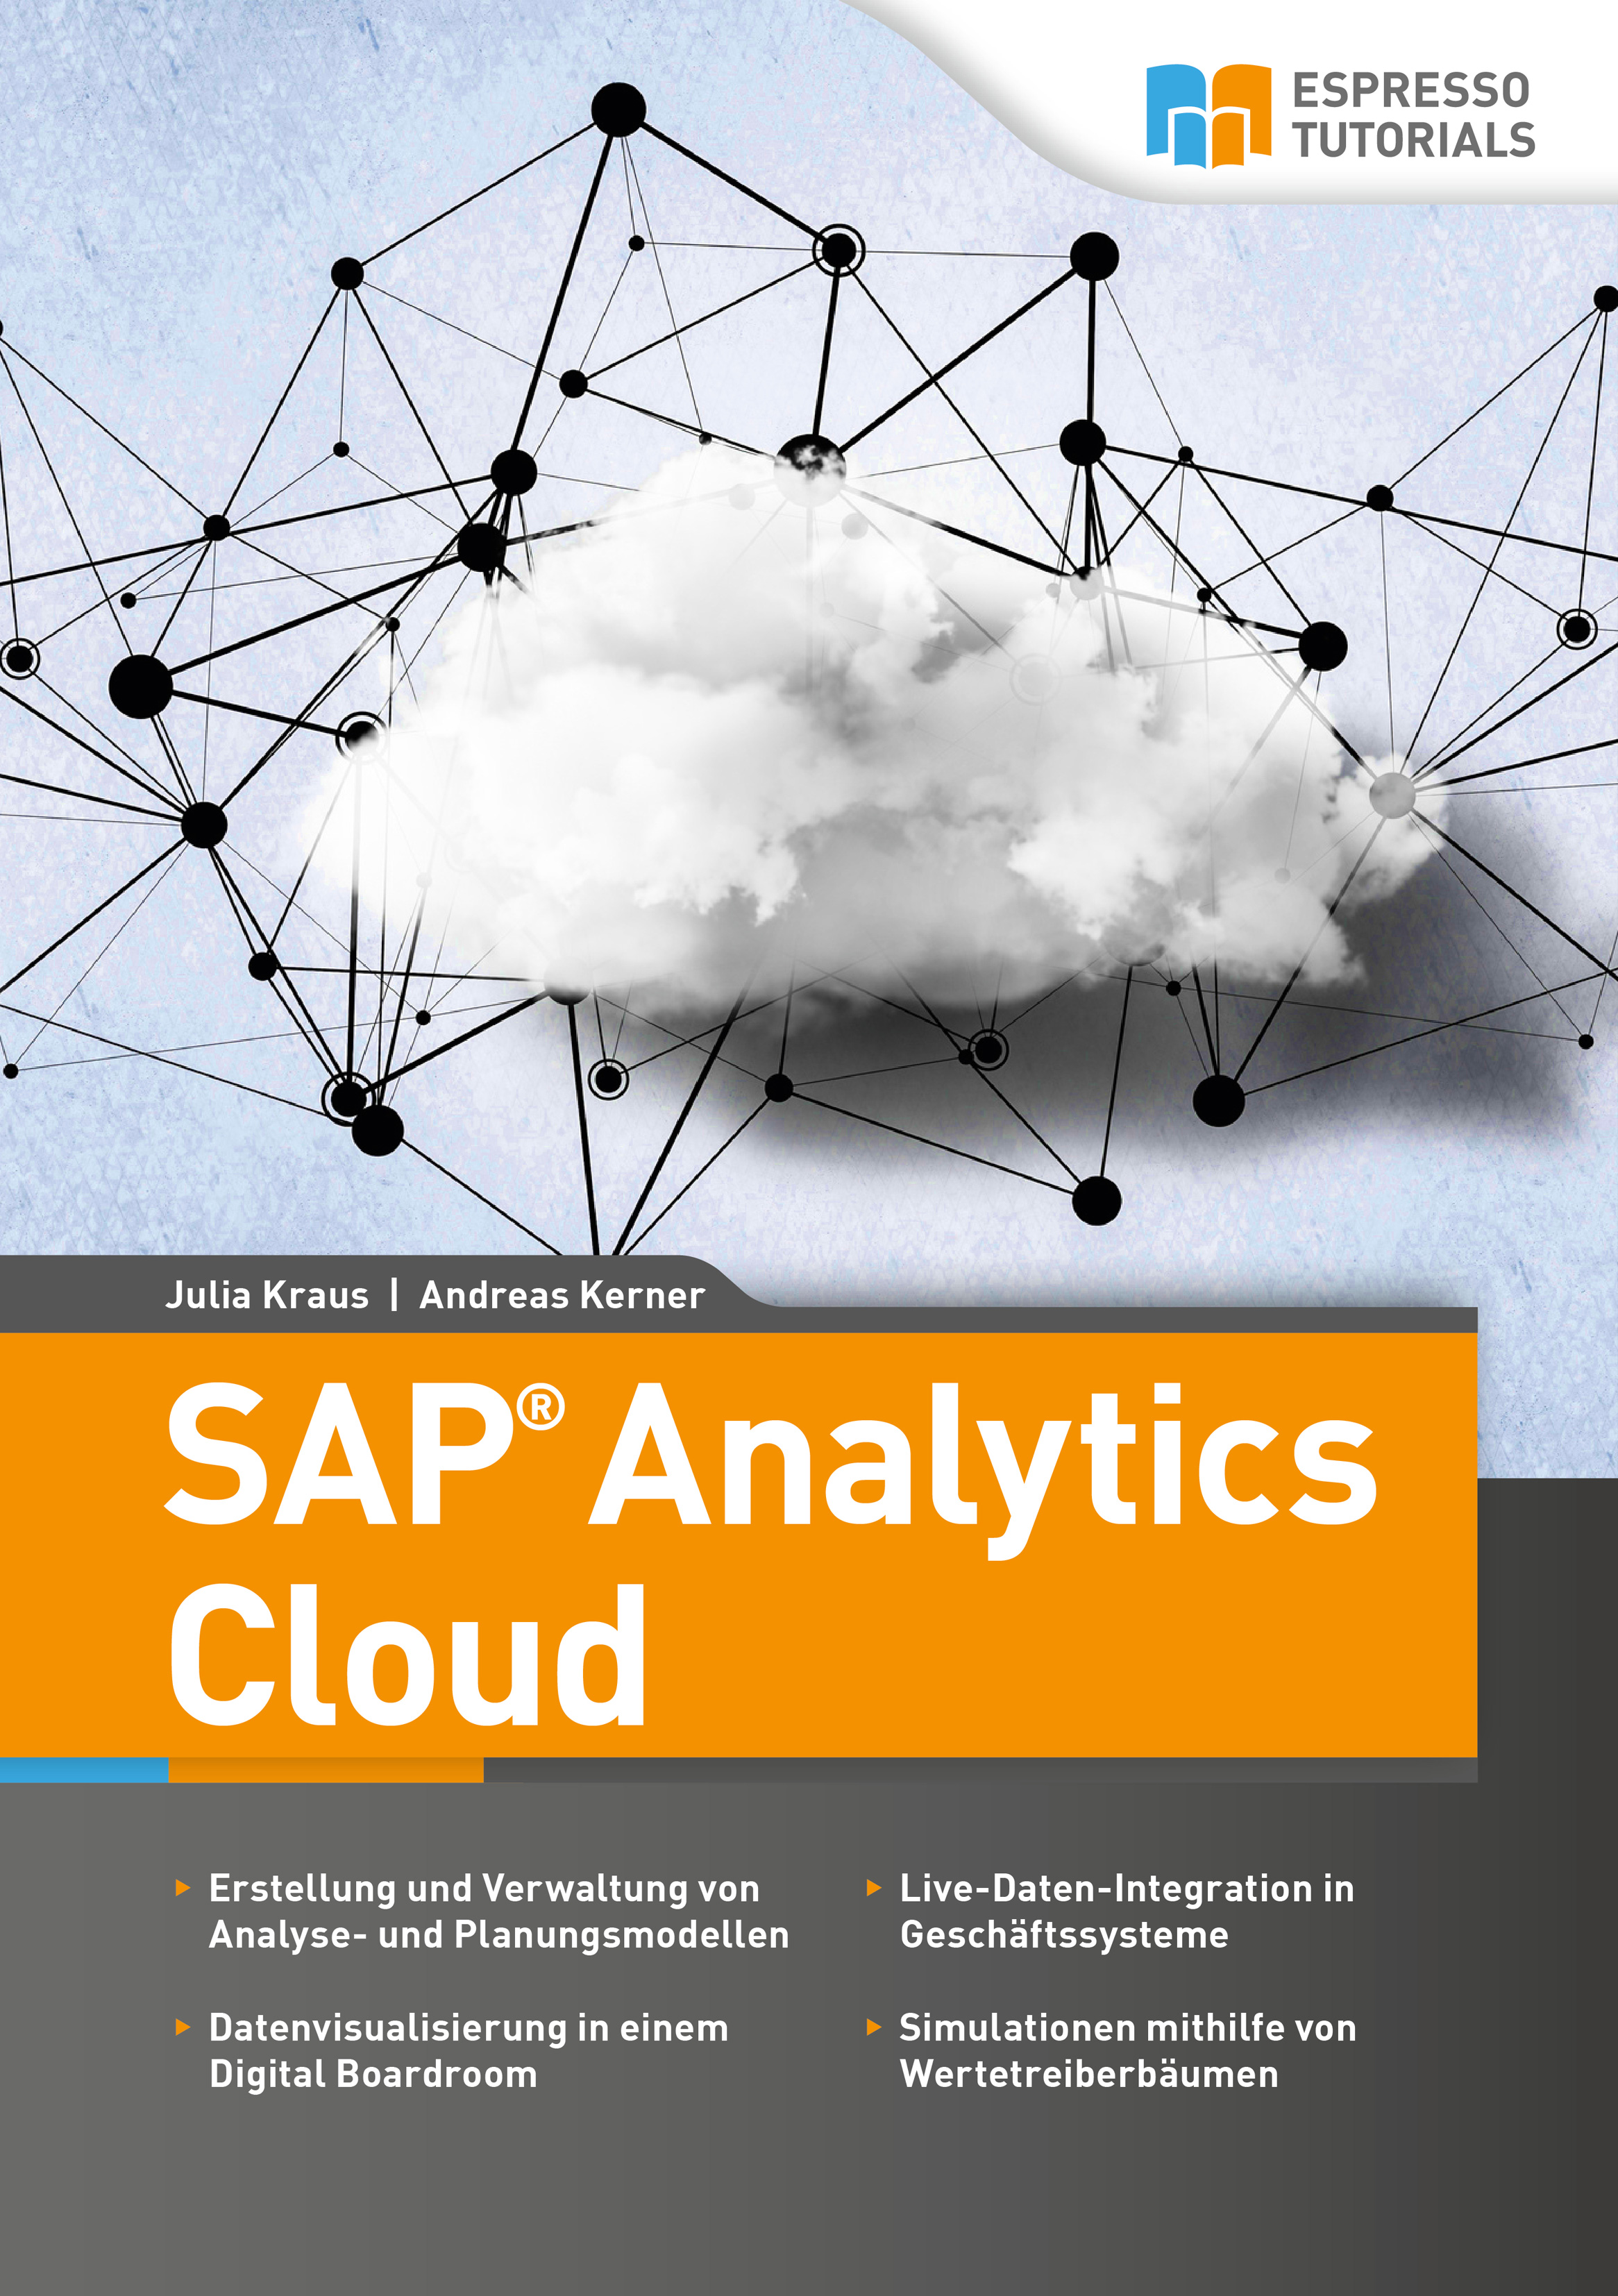 Sap Analytics Cloud Tutorial